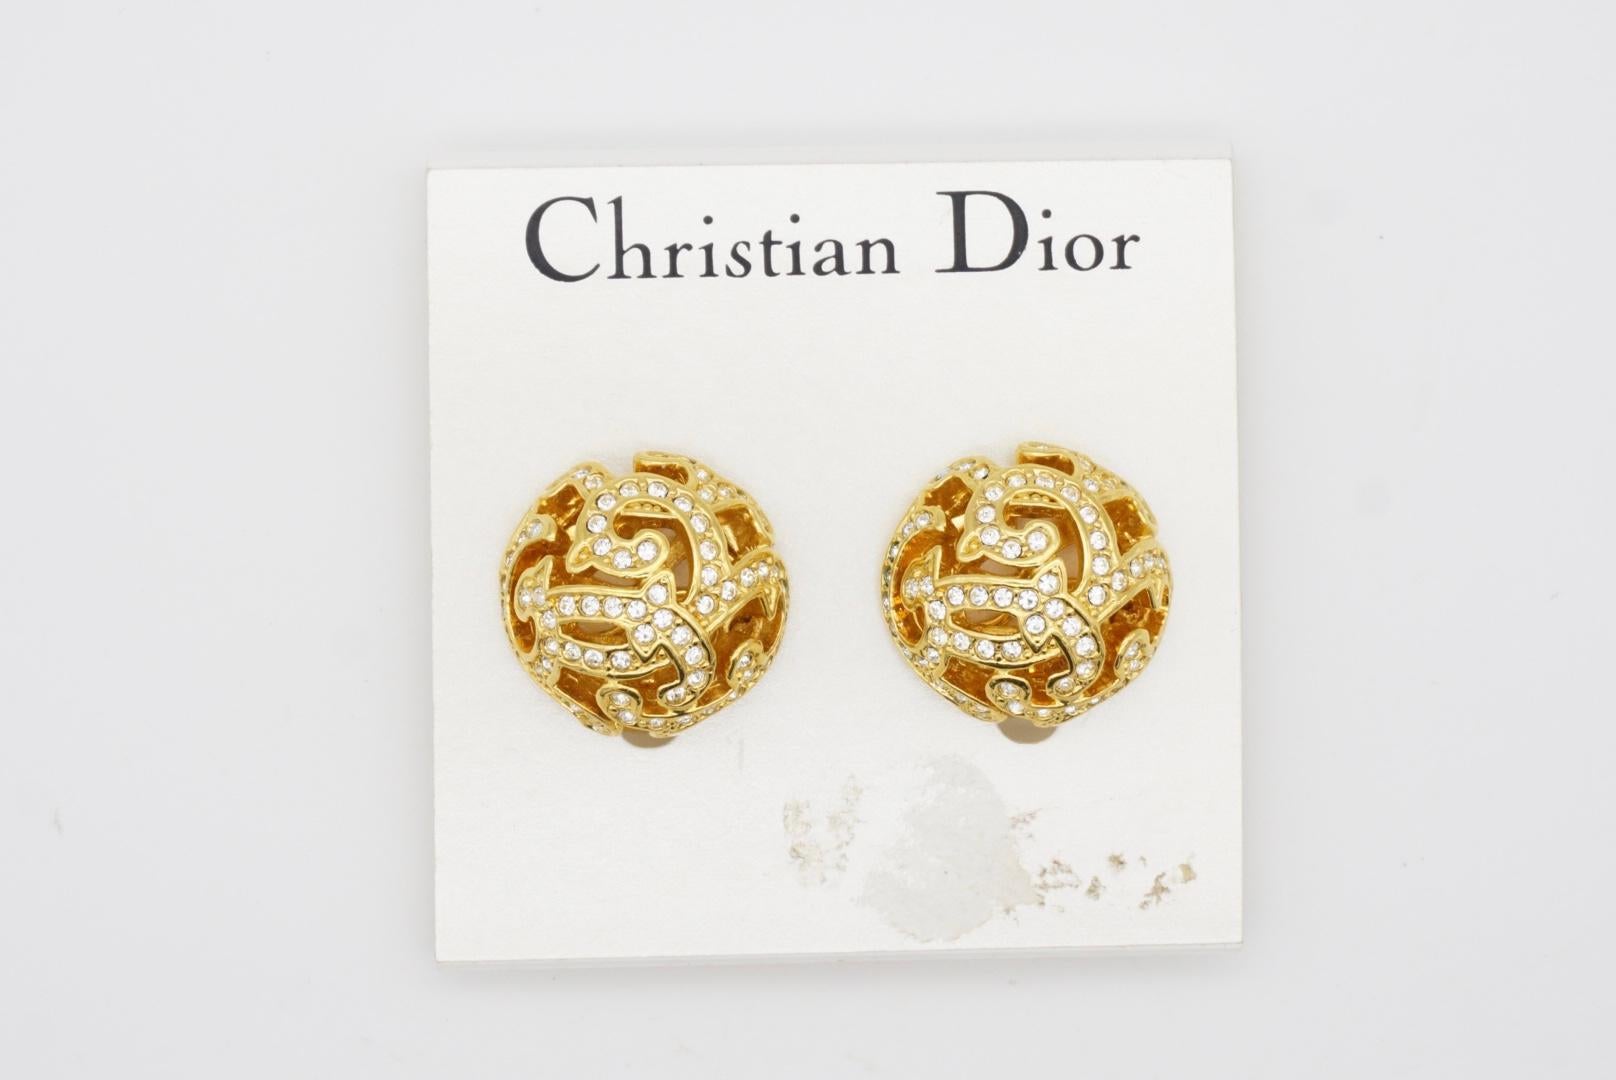 Christian Dior 1980 Boucles d'oreilles Clip or Filigrane Ball and Ball ajouré cristaux en vente 1